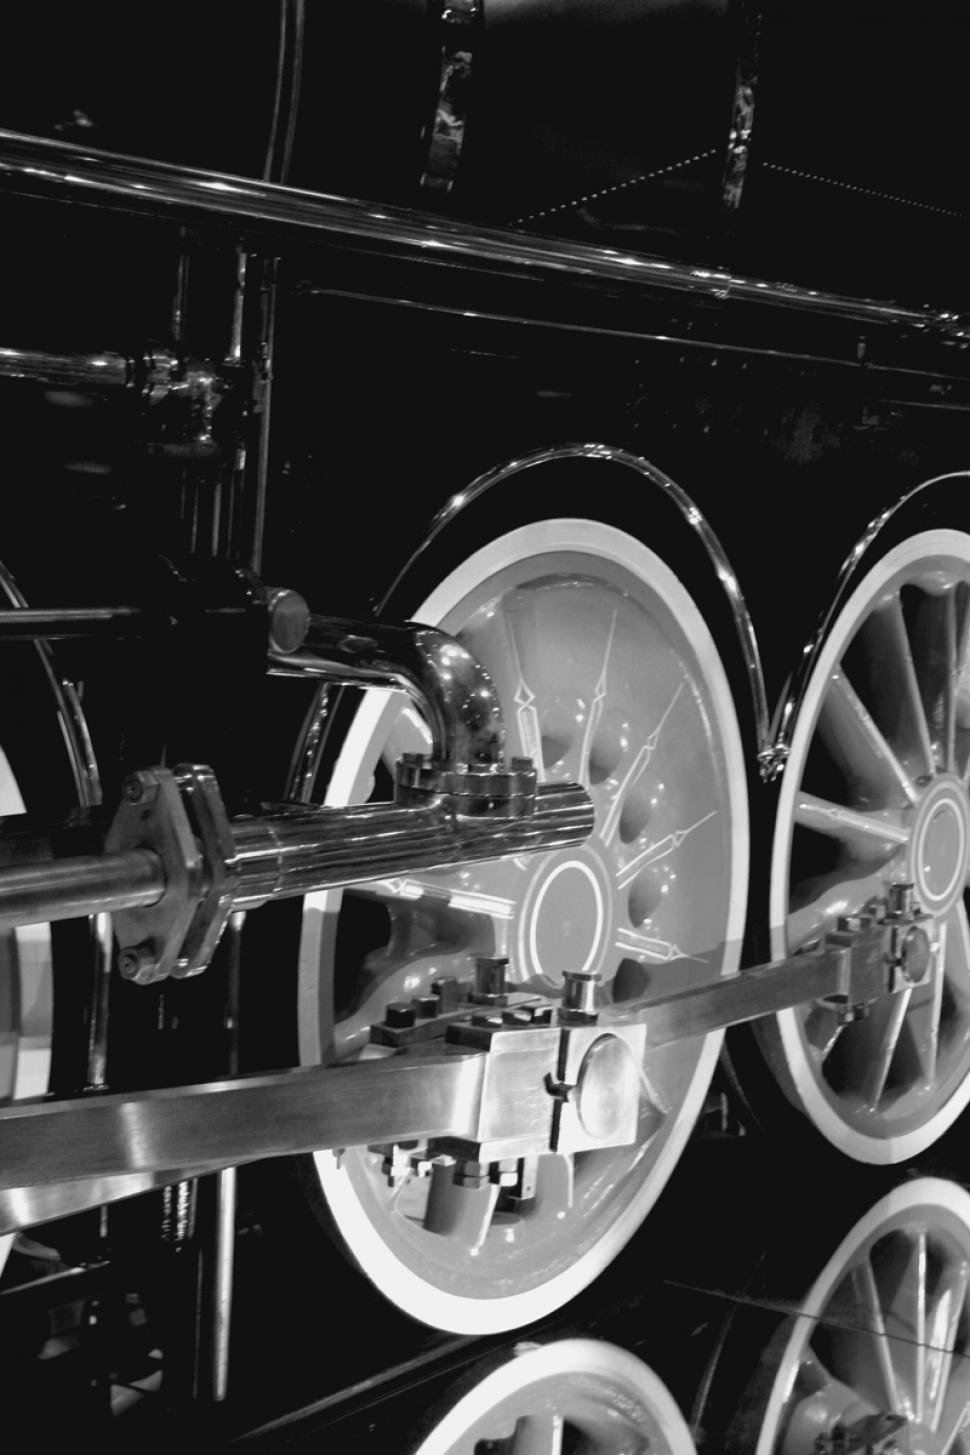 Free Image of Steam Locomotive Driving Wheels 